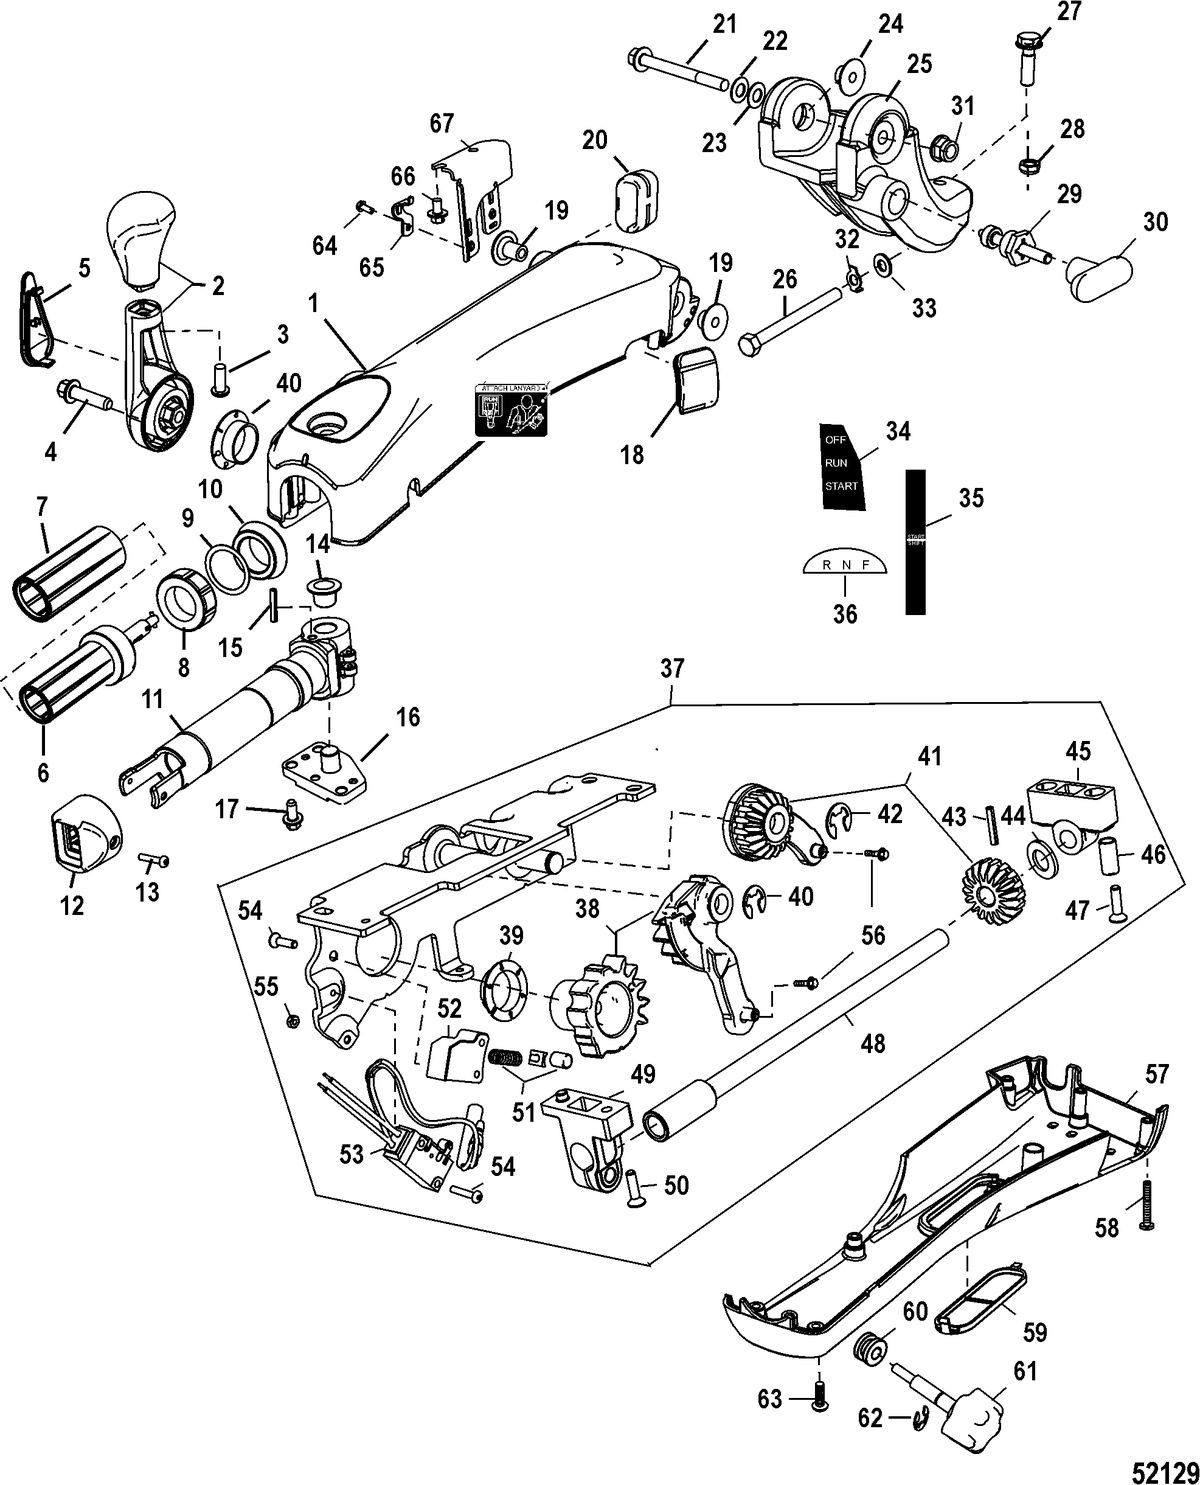 ACCESSORIES STEERING SYSTEMS AND COMPONENTS Tiller Handle Kit(Big Tiller-Manual, Mechanical) Design II